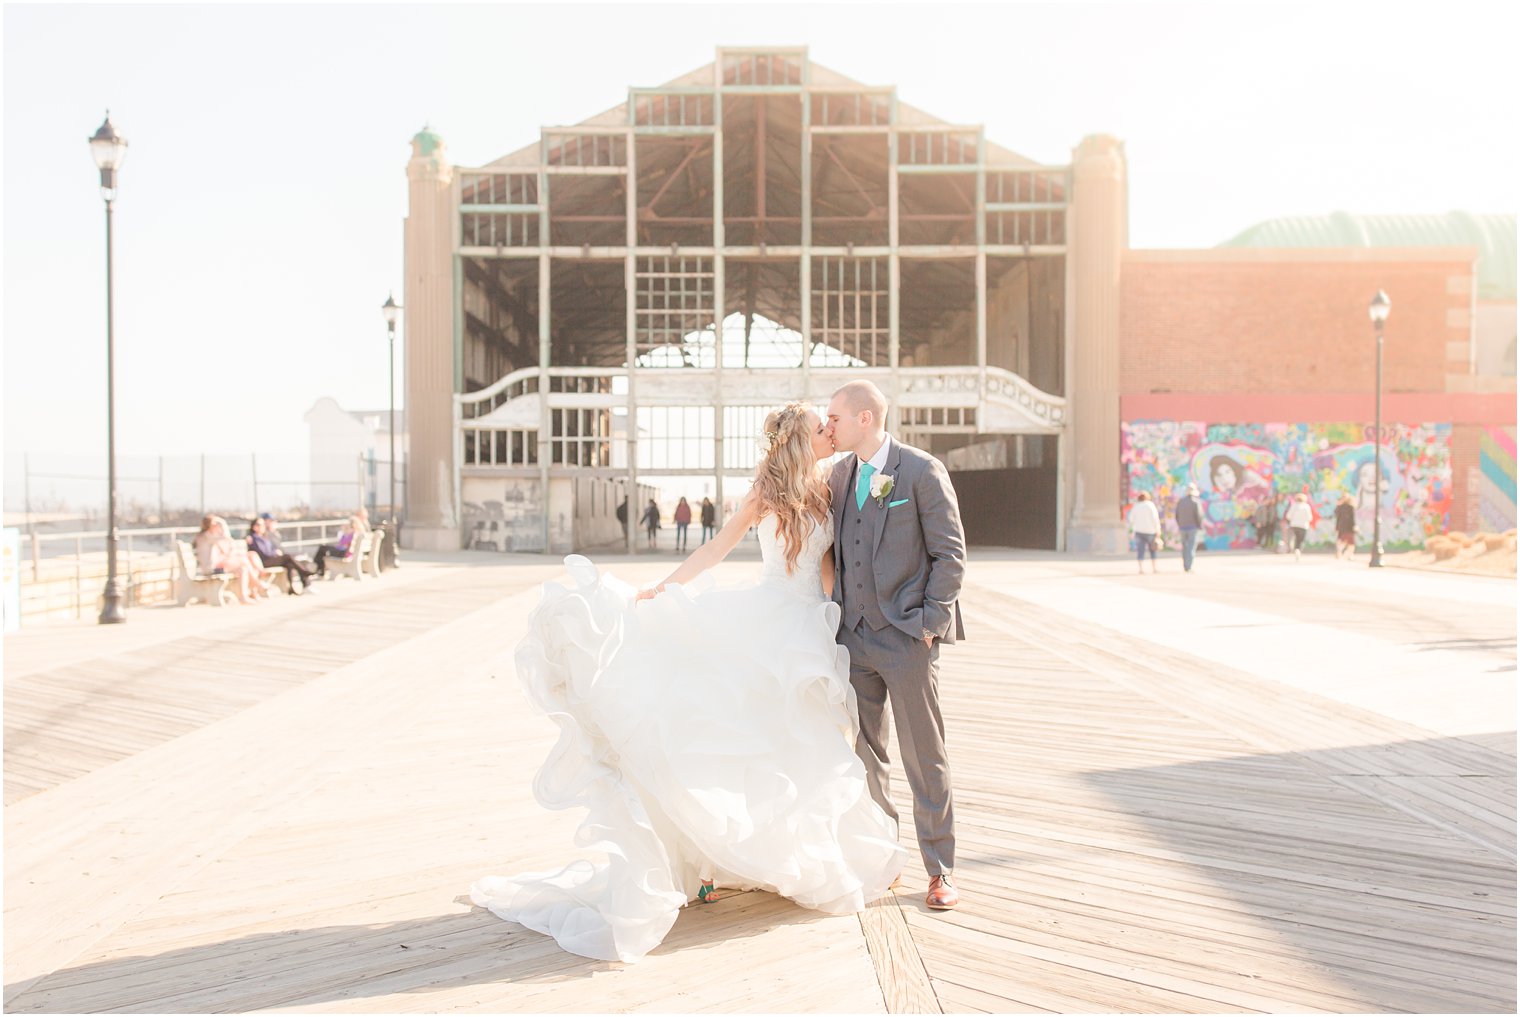 Wedding photos at Asbury Park Boardwalk